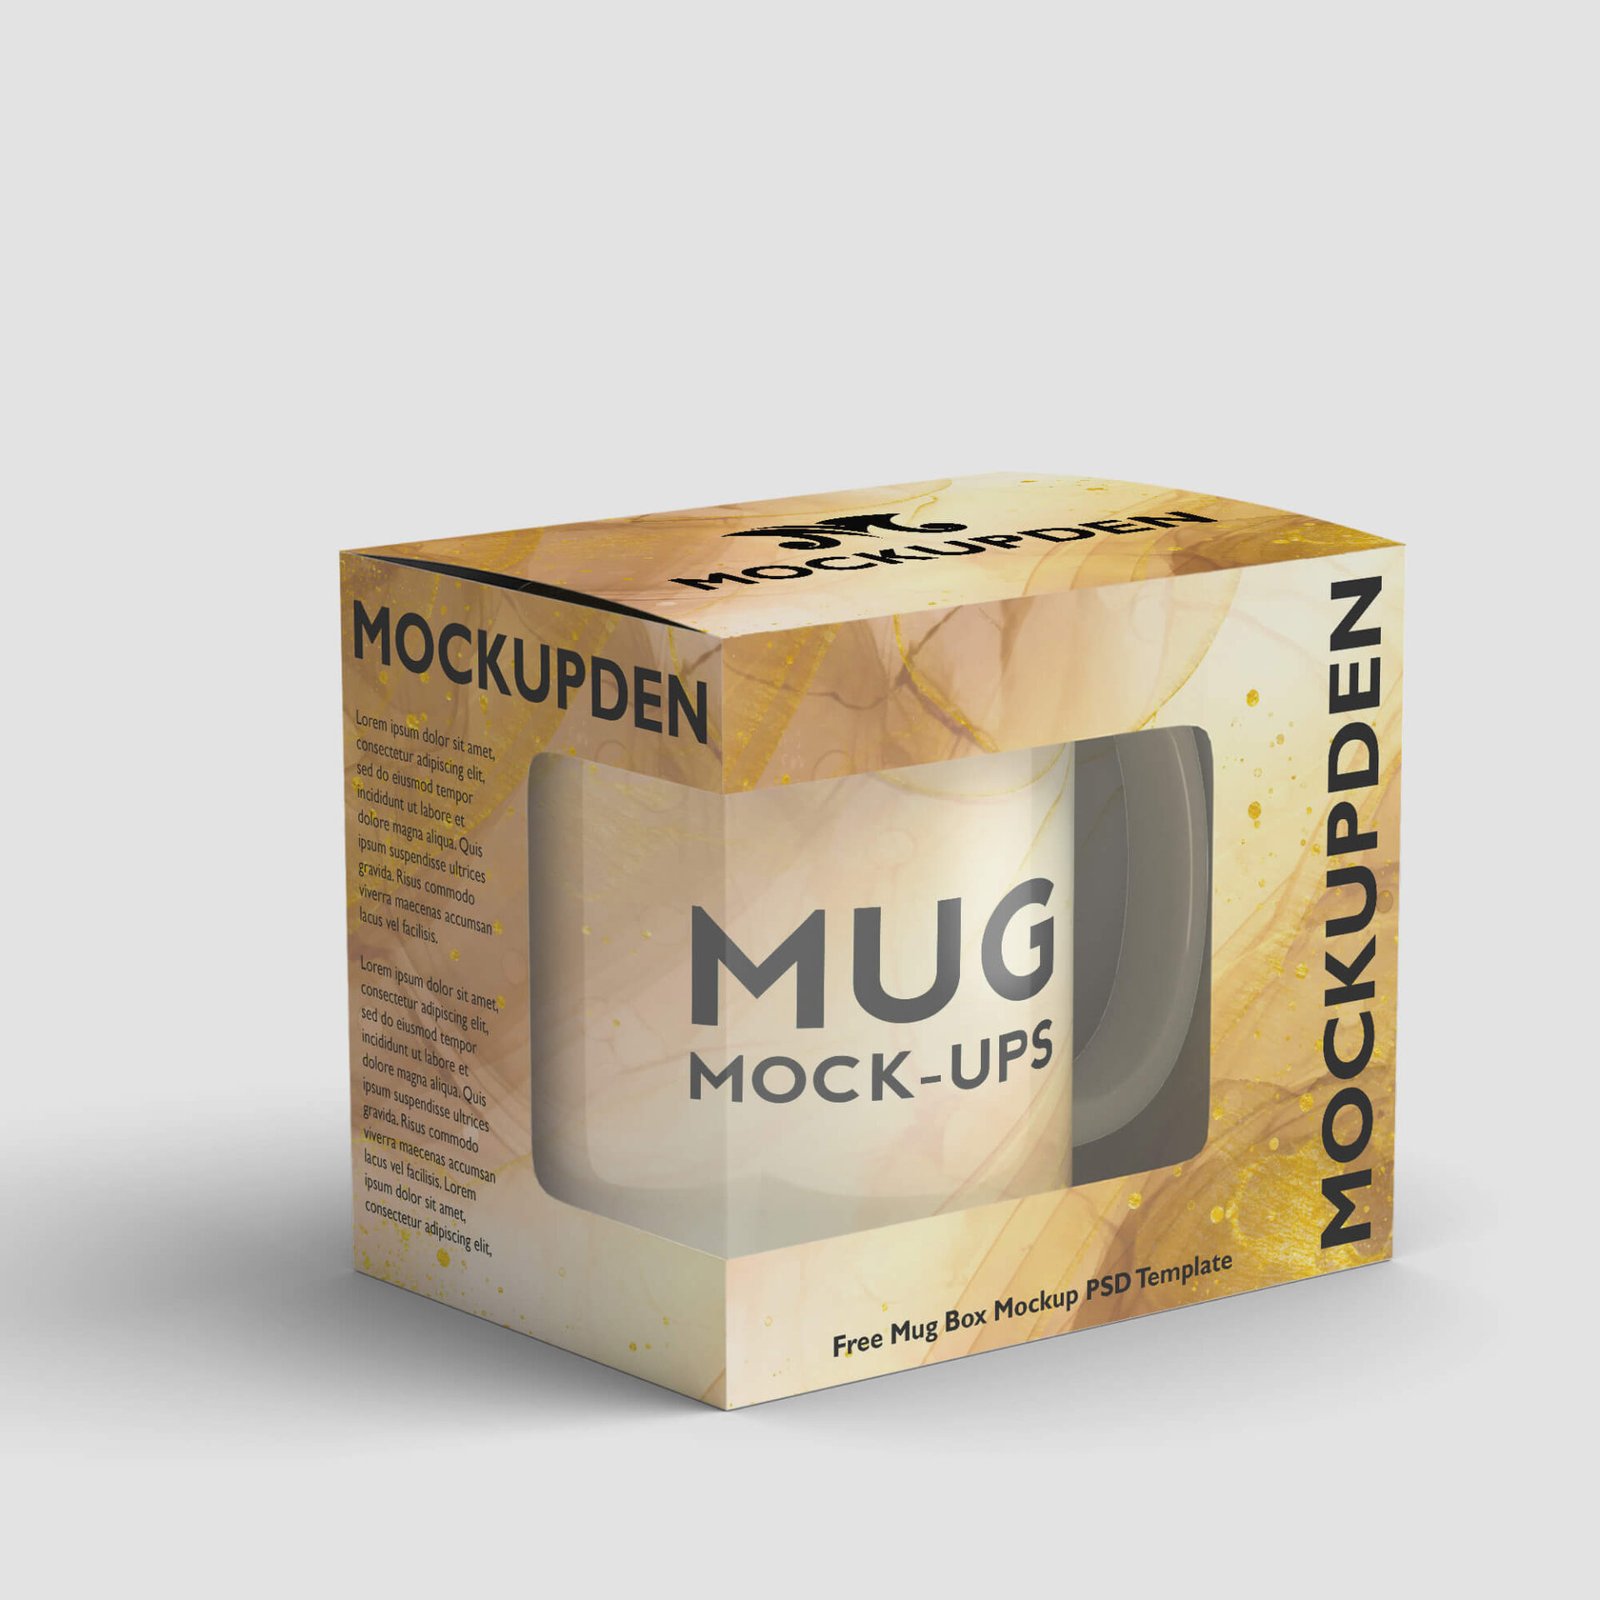 free-mug-box-mockup-psd-template-mockup-den